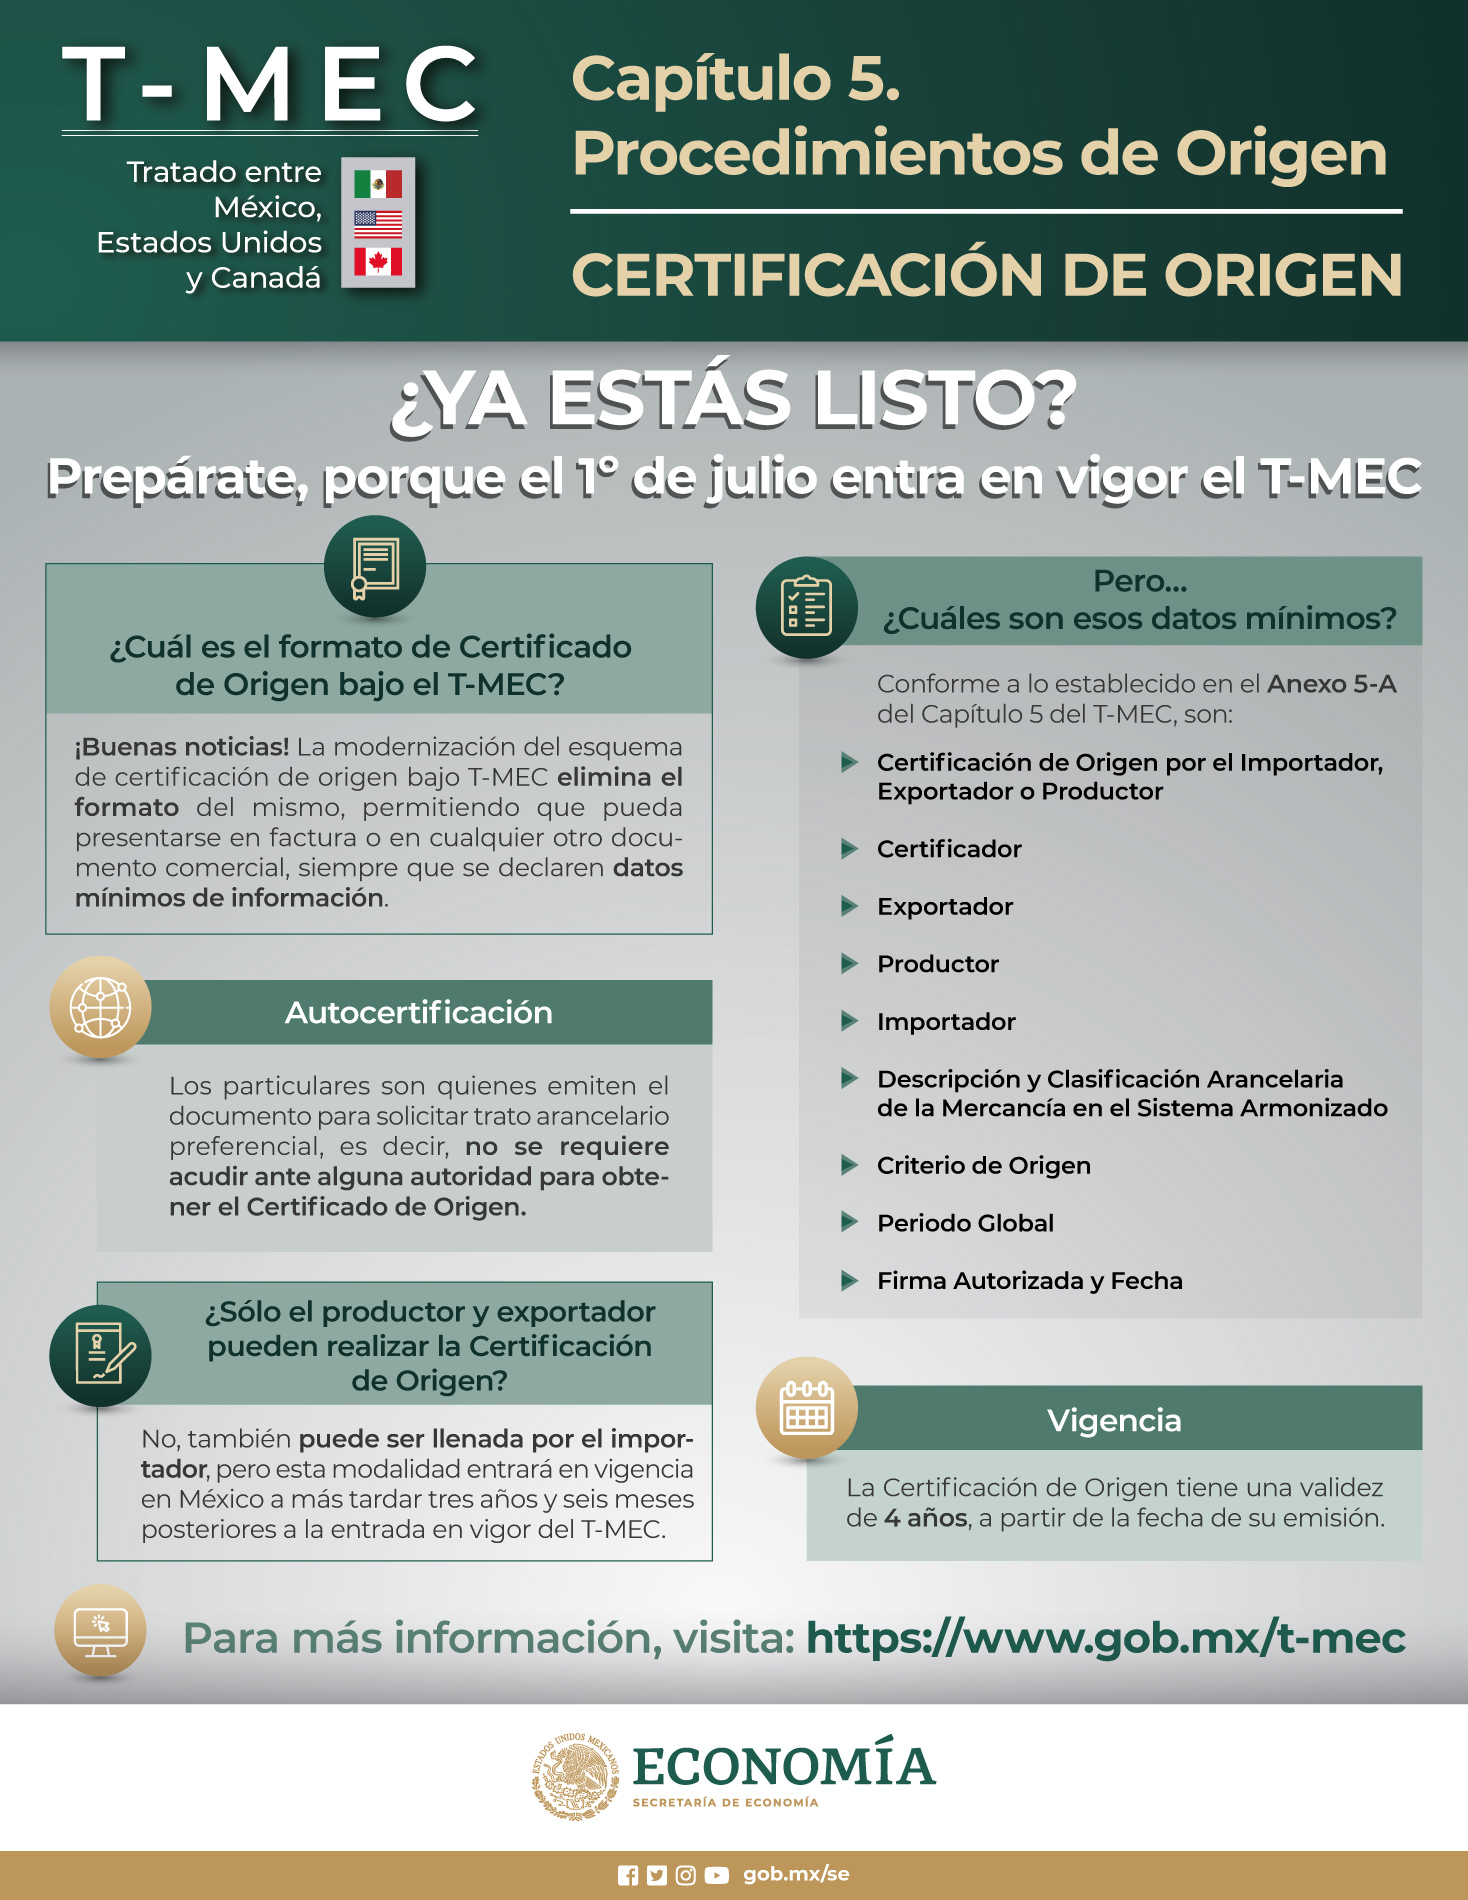 /cms/uploads/image/file/586475/TMEC-certificados_origen-infografia.jpg